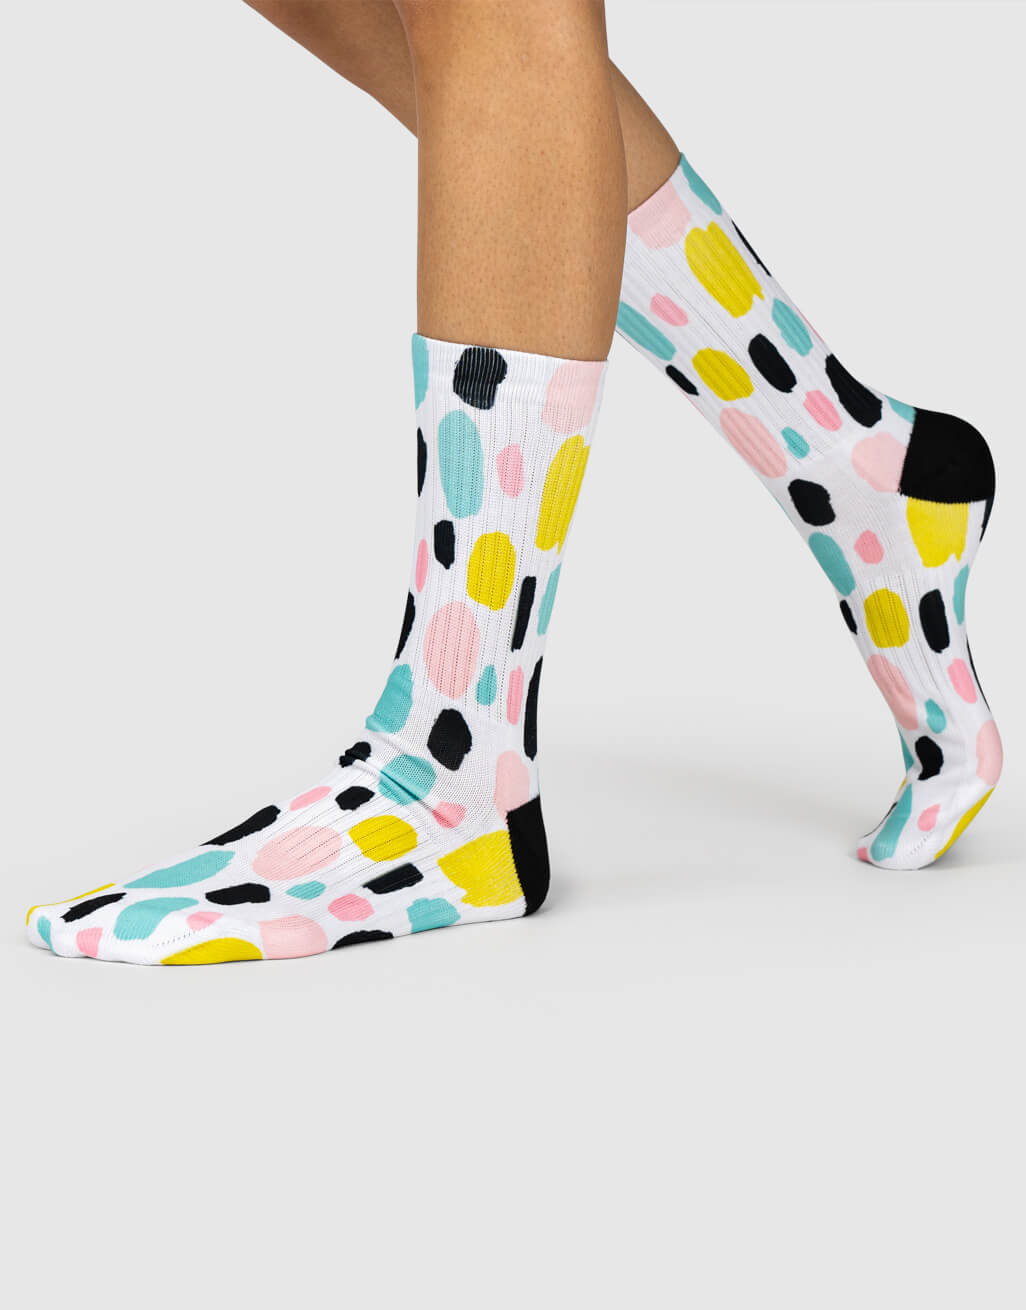 Paint Spot Socks